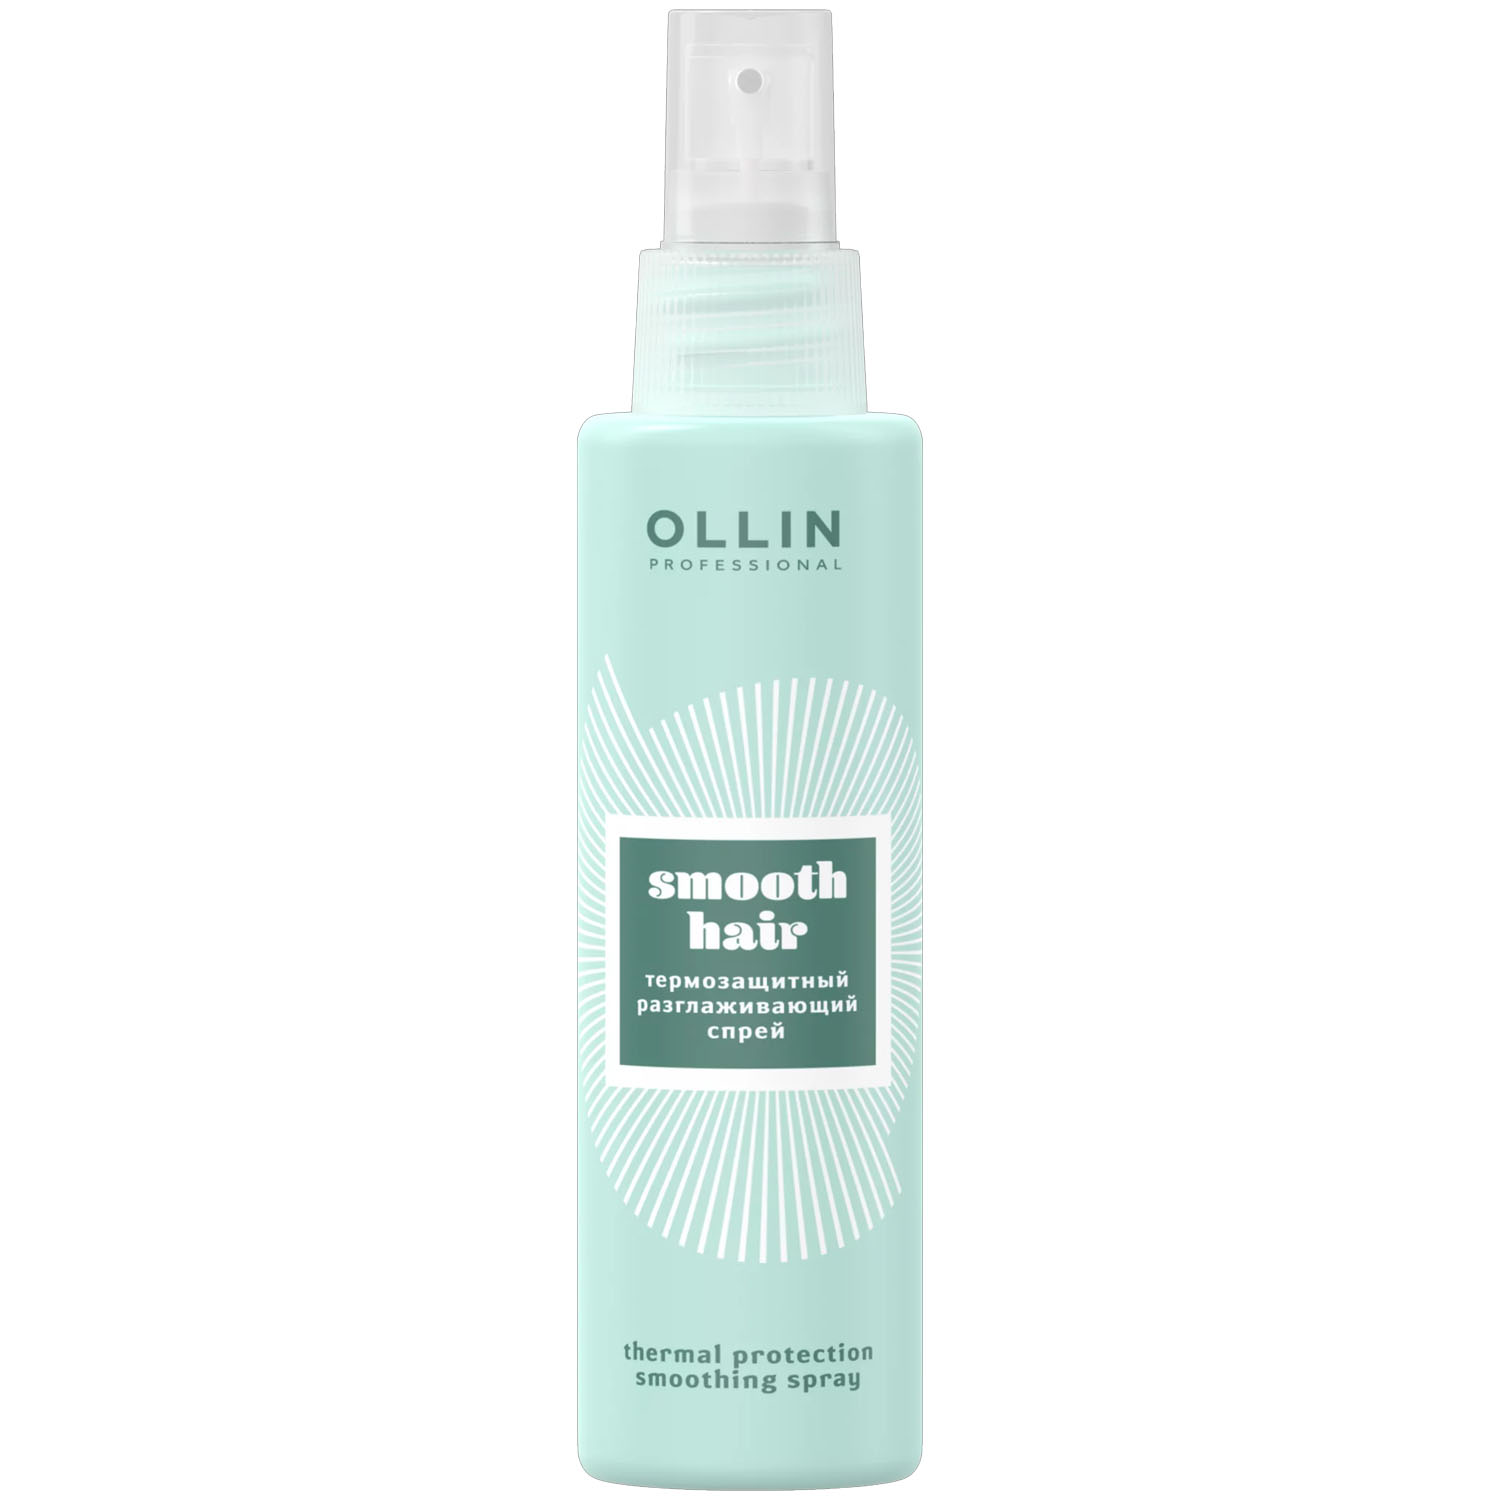 Ollin Professional Термозащитный разглаживающий спрей, 150 мл (Ollin Professional, Curl  Smooth Hair)